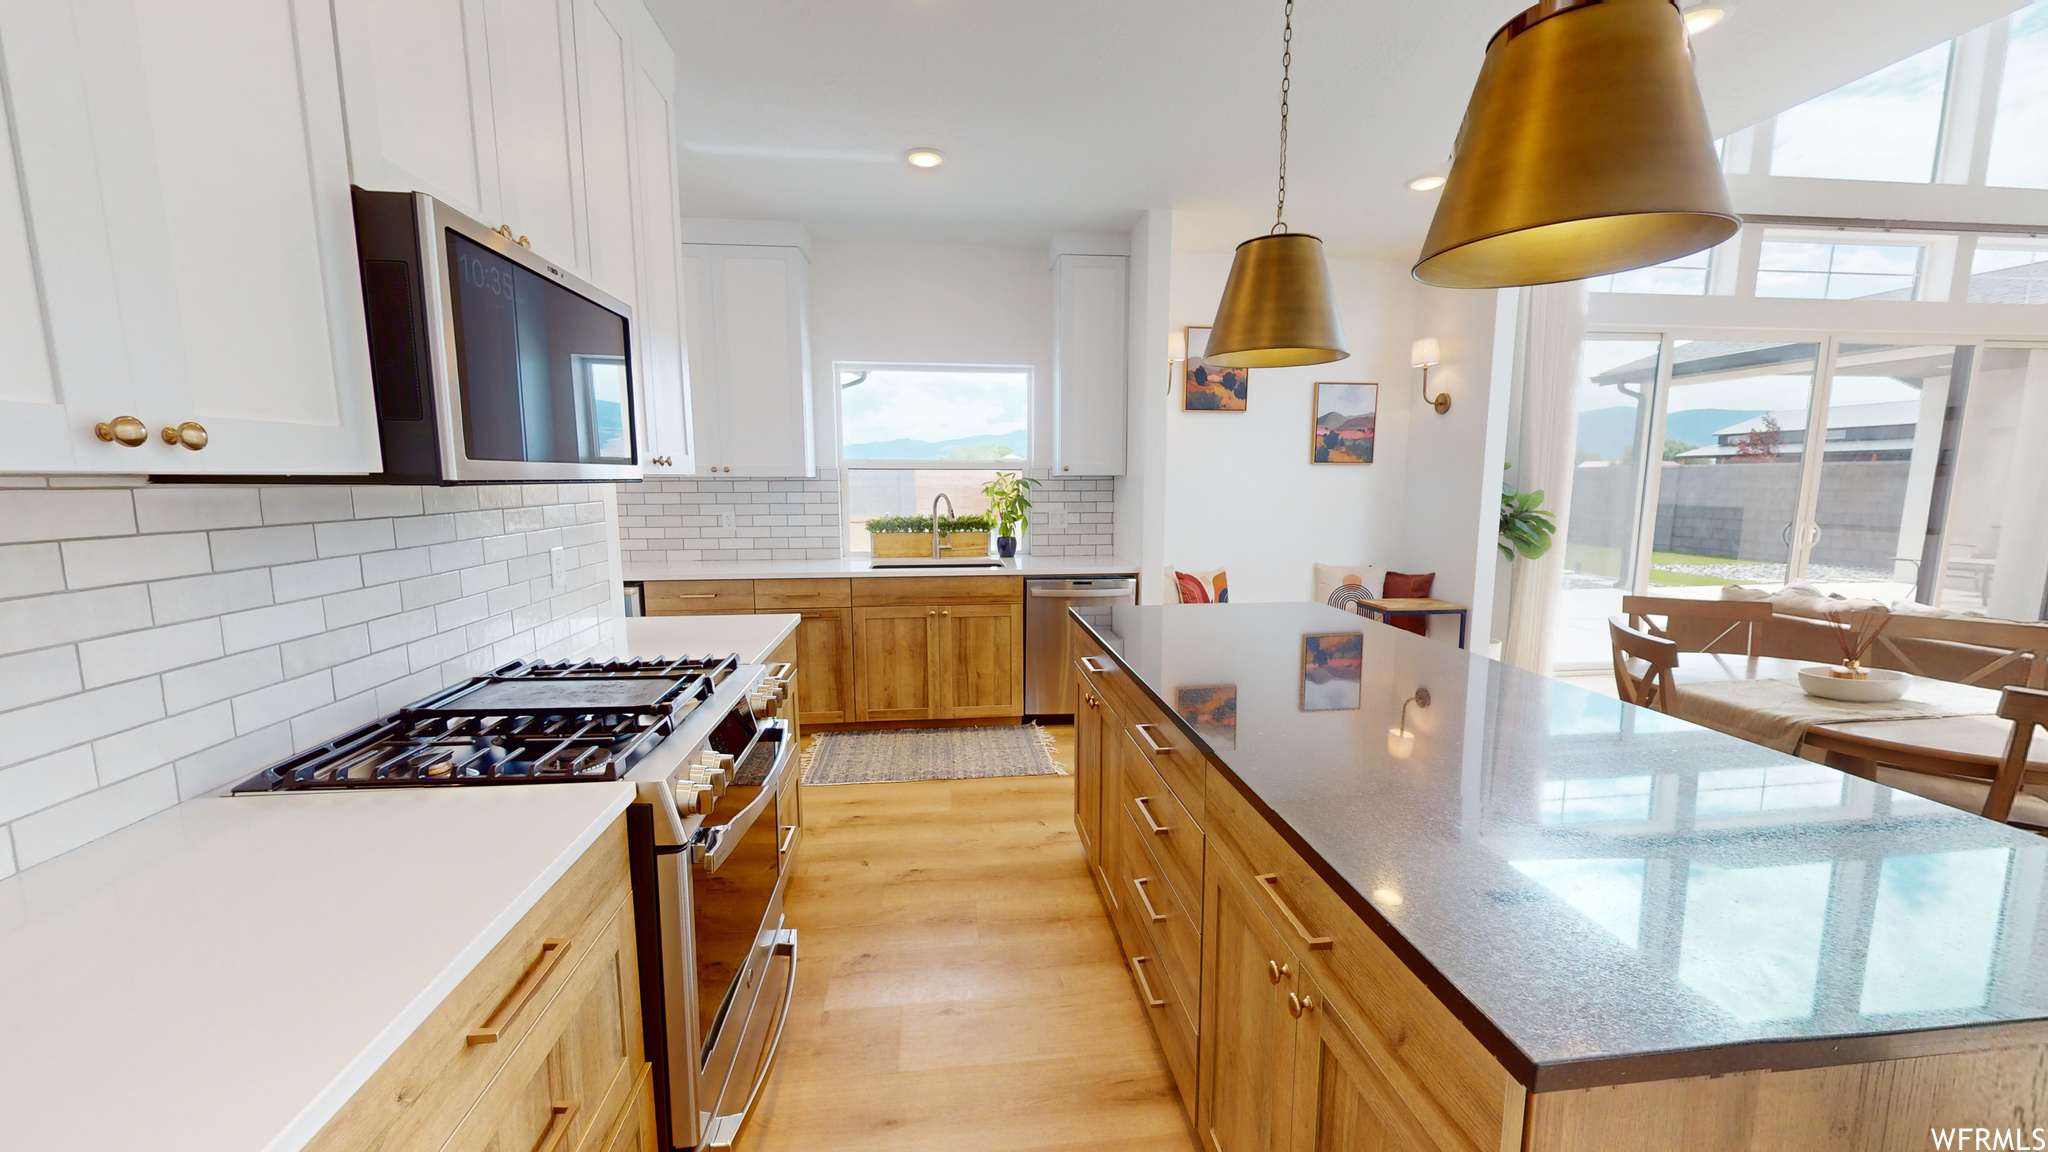 Kitchen featuring sink, tasteful backsplash, white cabinetry, light wood-type flooring, and pendant lighting